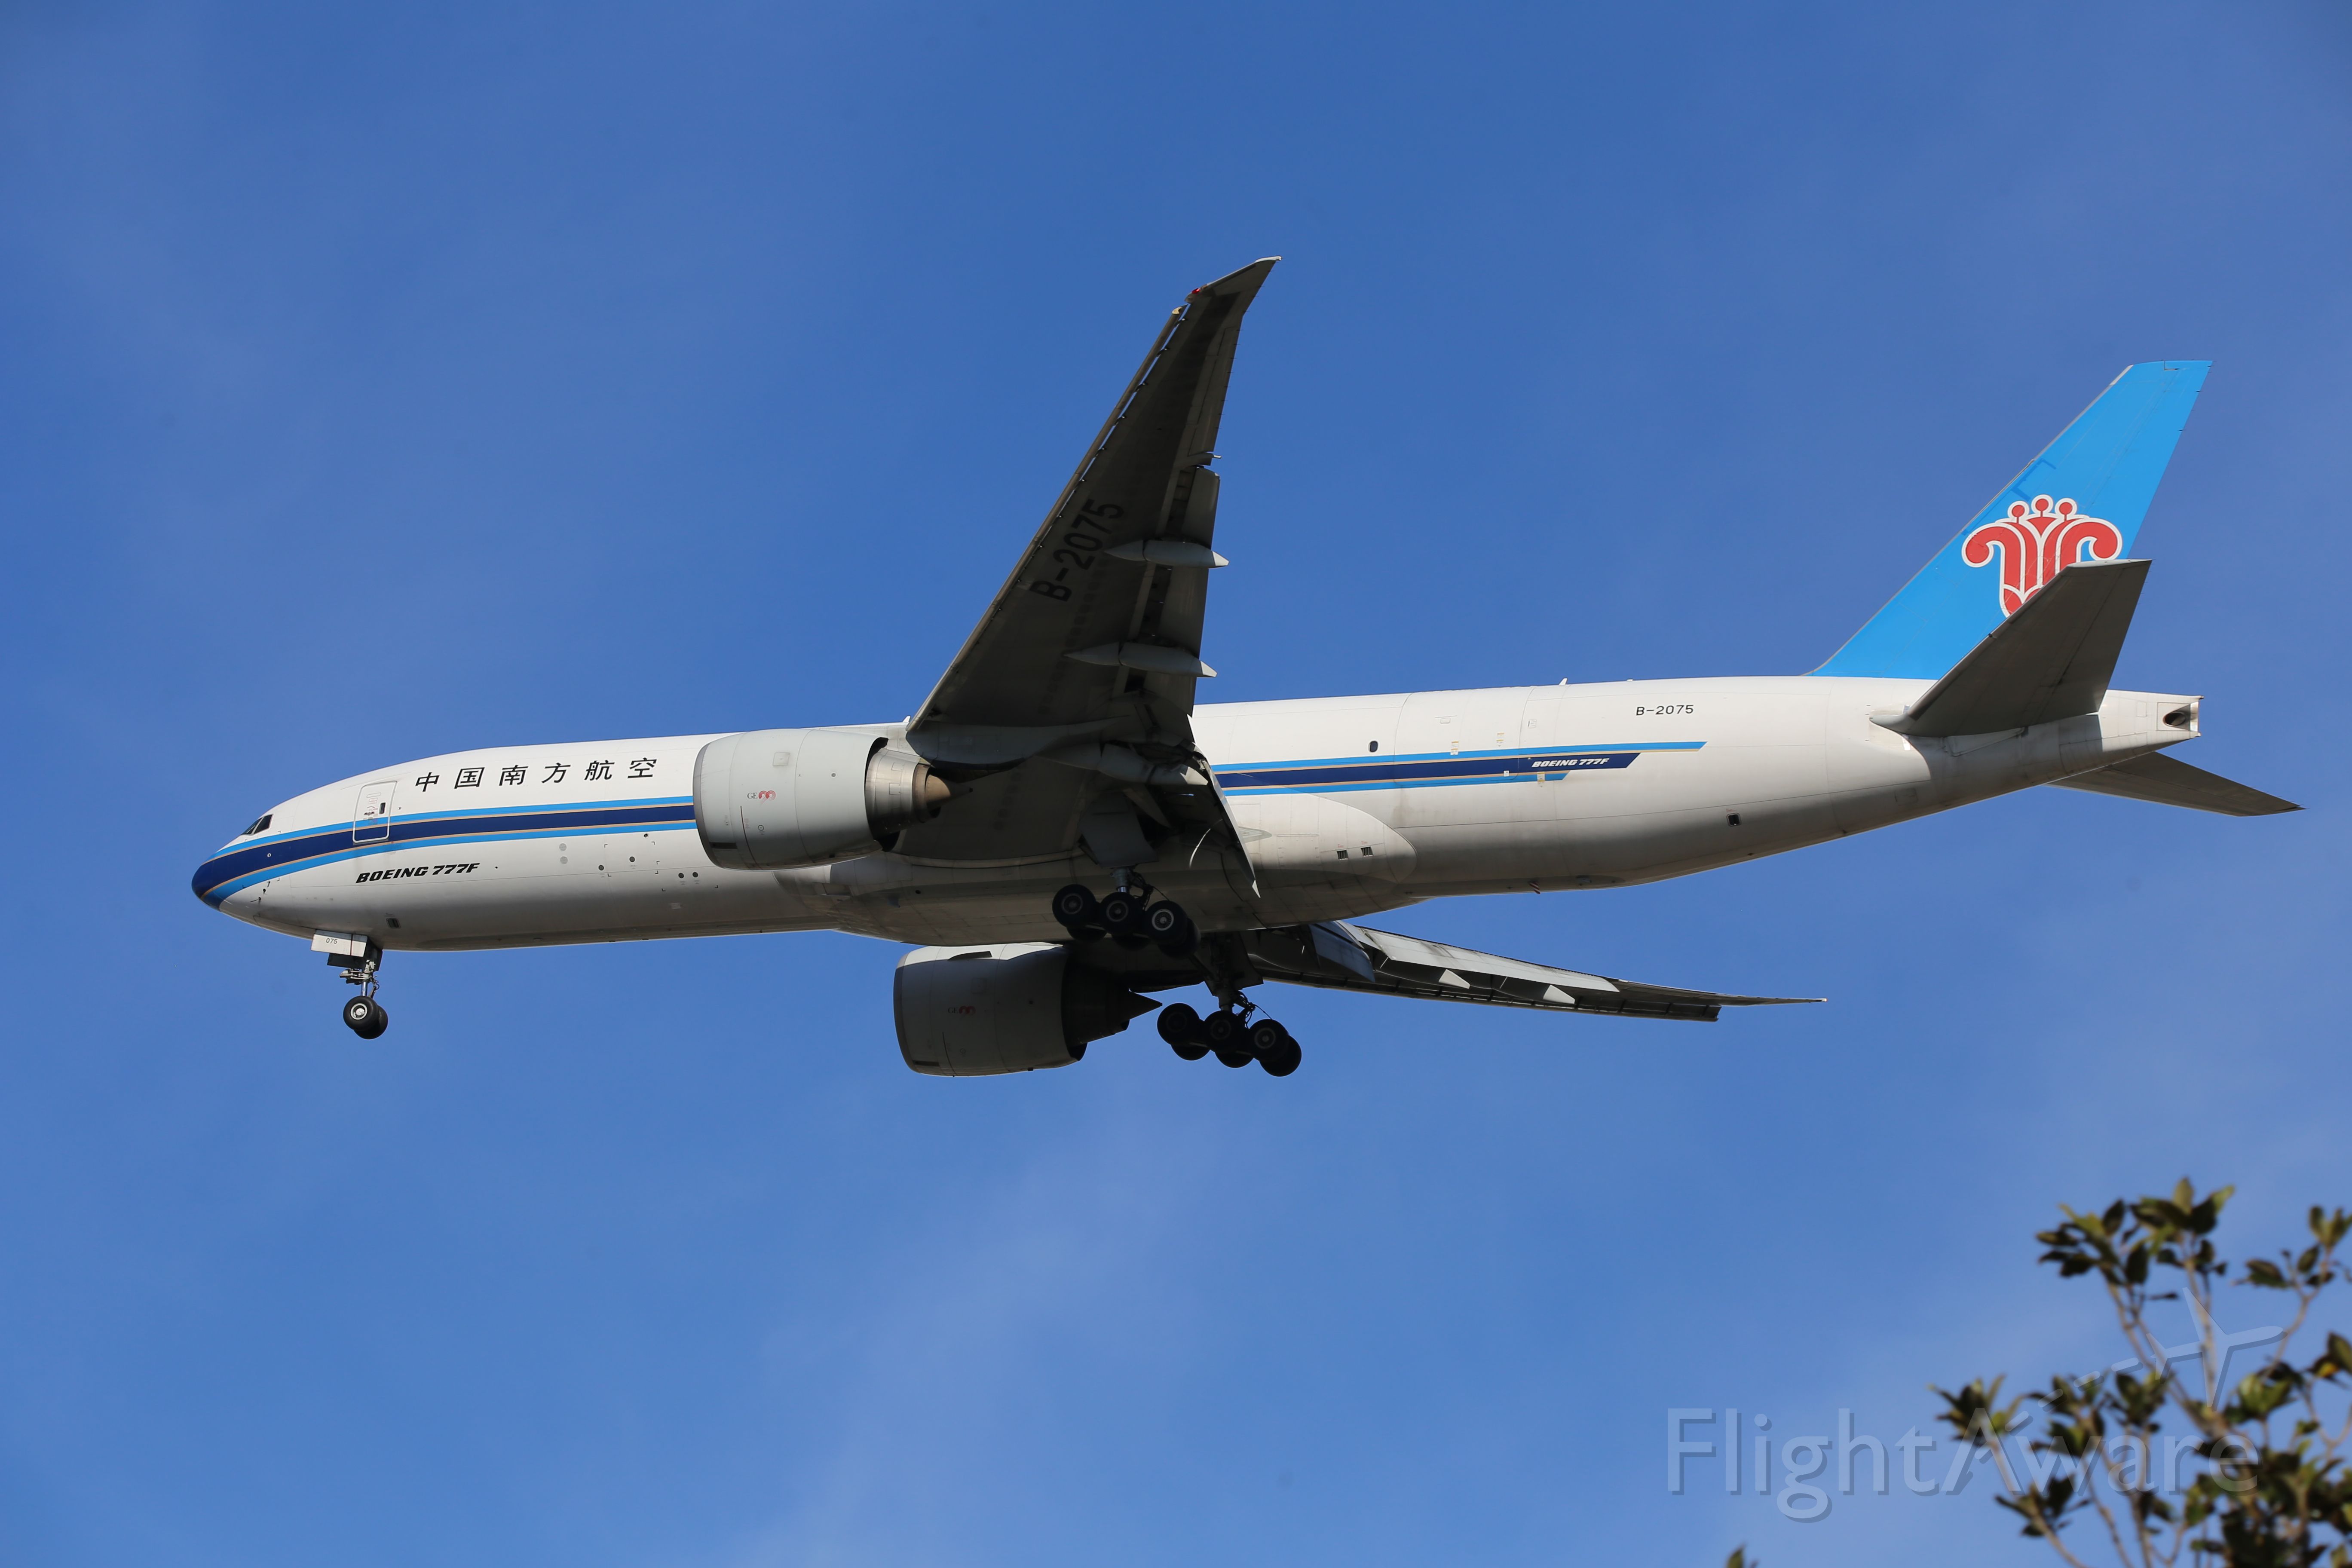 BOEING 777-200LR (B-2075)